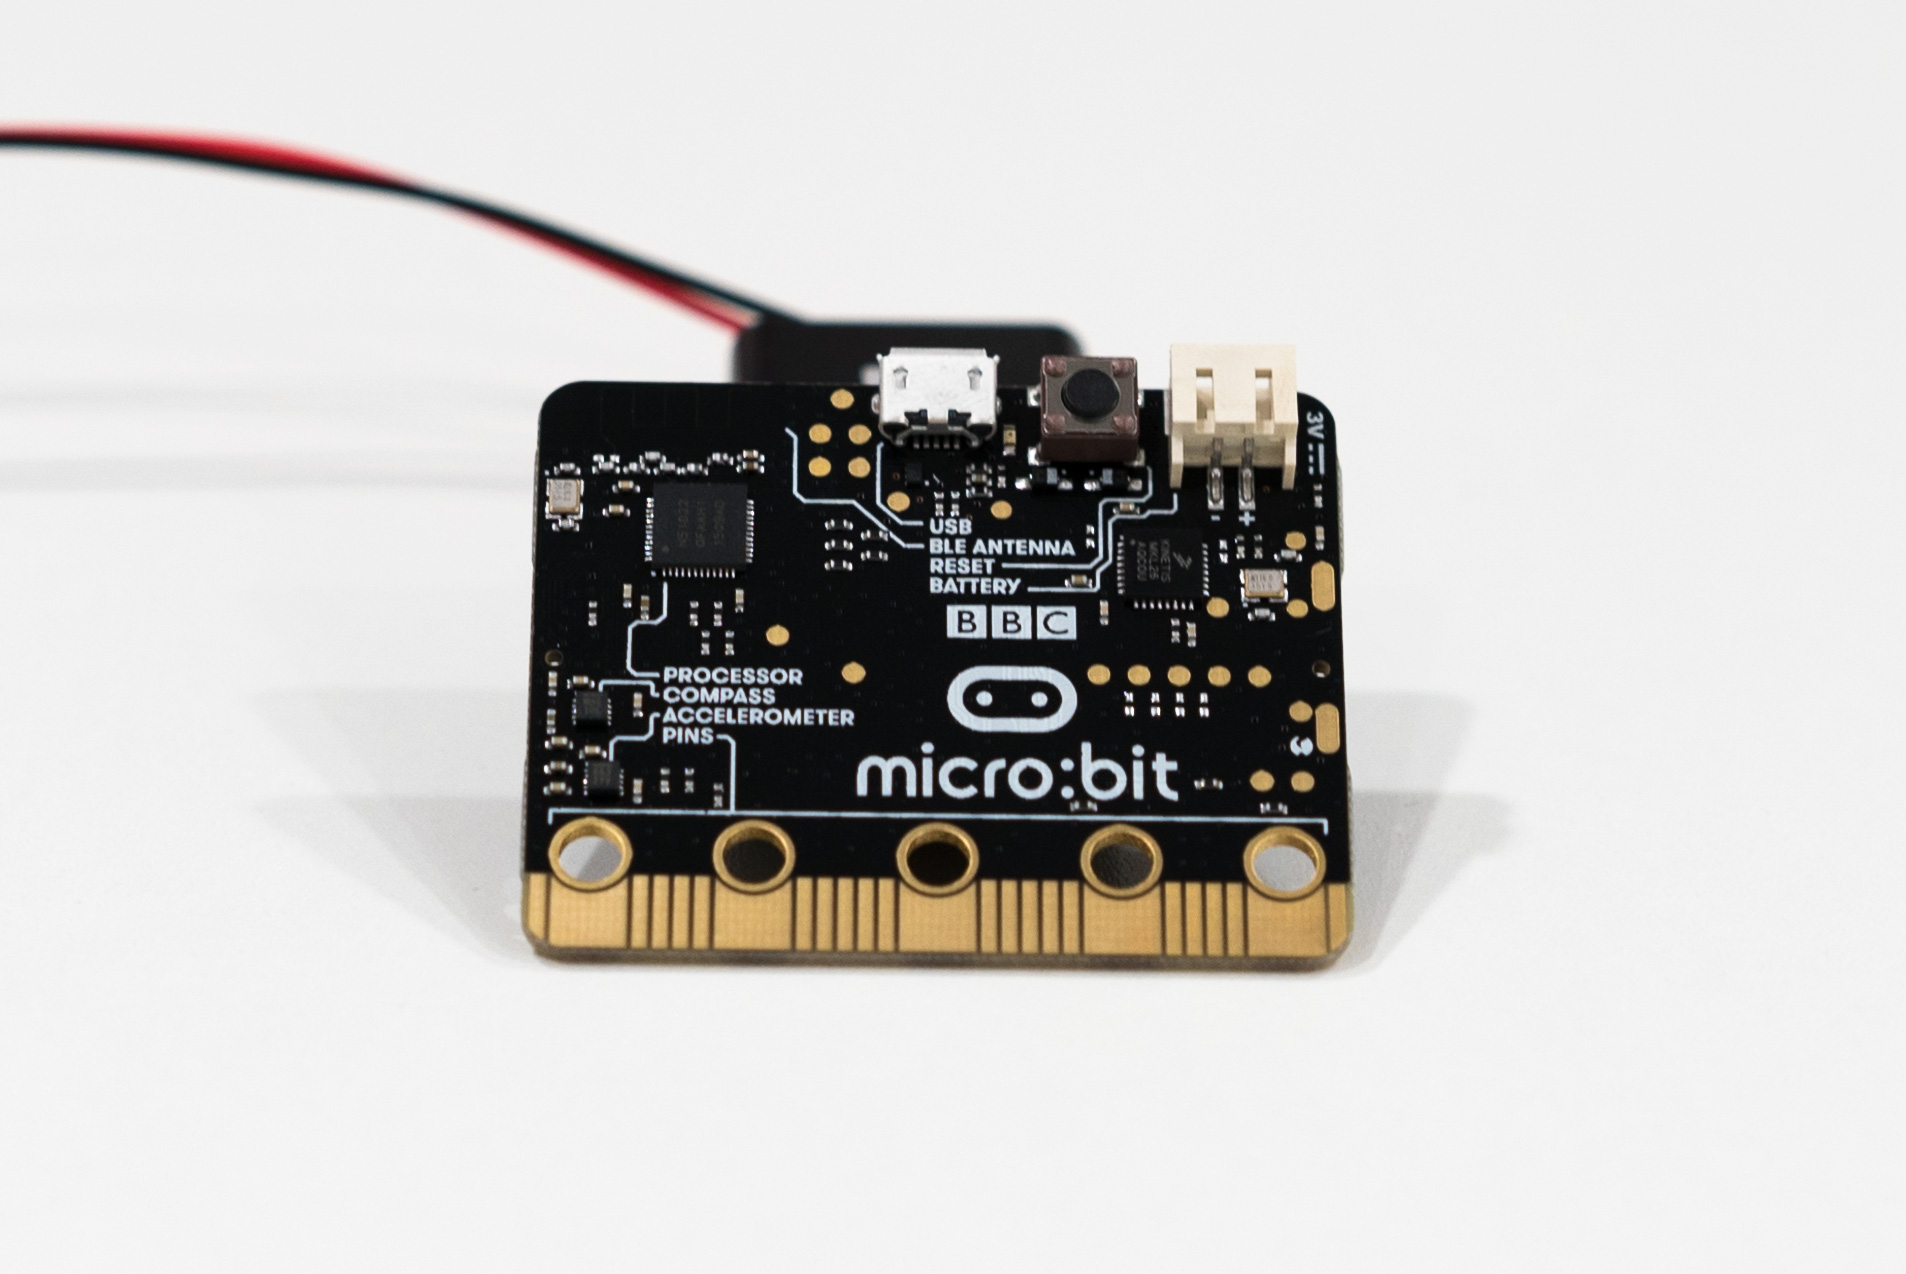 Адреса микро. Акселерометр microbit. Микробит Mini PC. Micro a1443. Micro bit проекты.